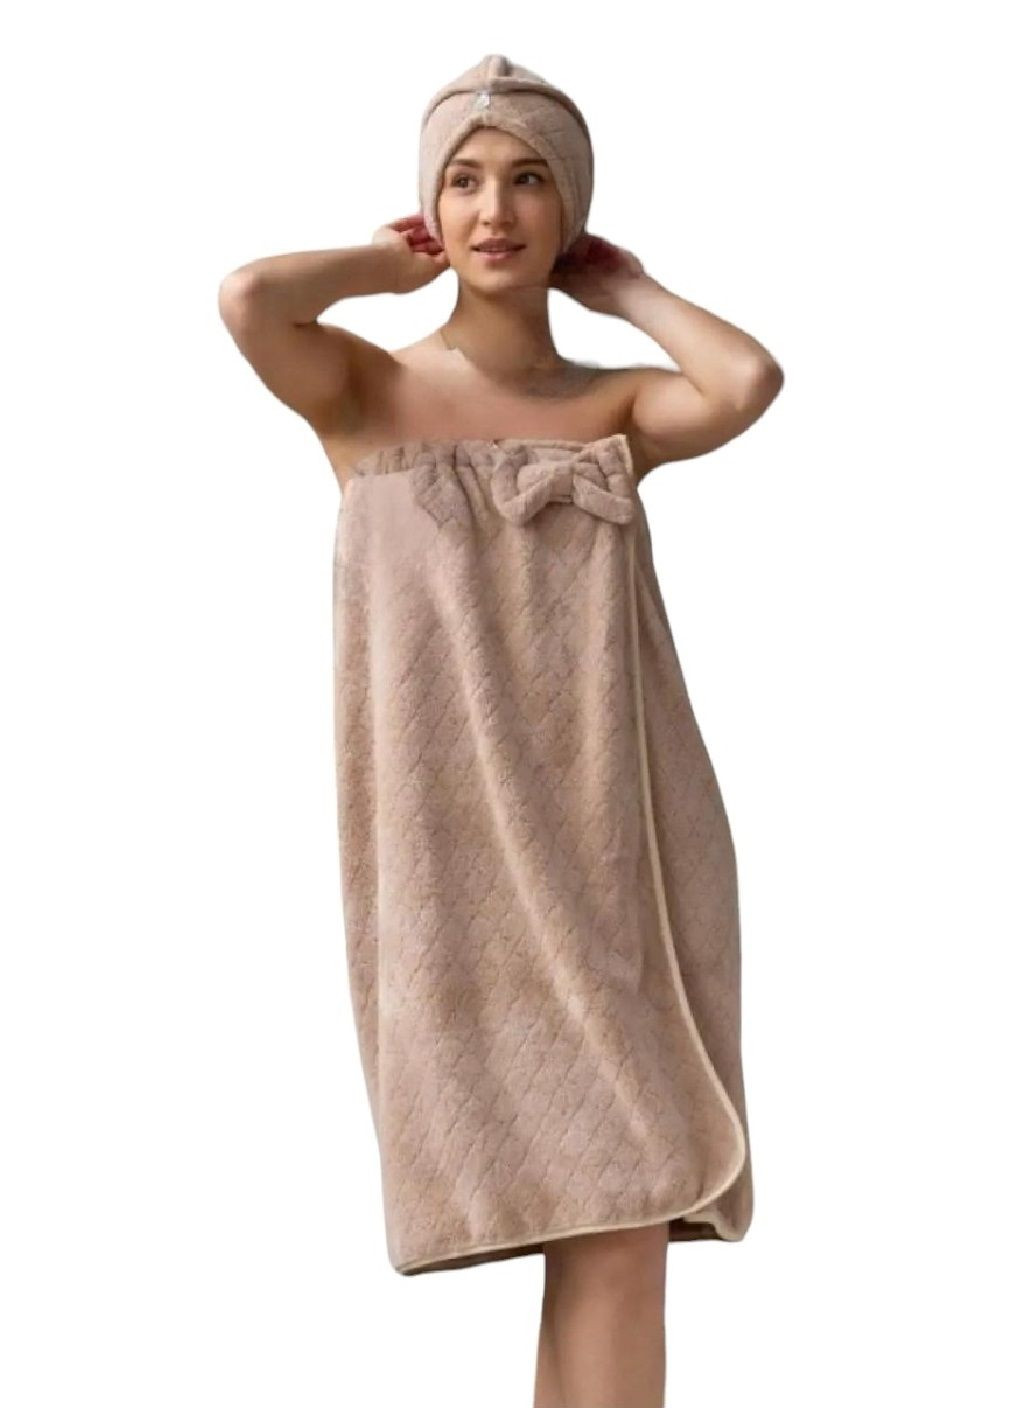 Комплект набор полотенце халат чалма на голову для сауны бани душа бассейна микрофибра 140х80 см (476957-Prob) Косичка капучино Unbranded (292848663)